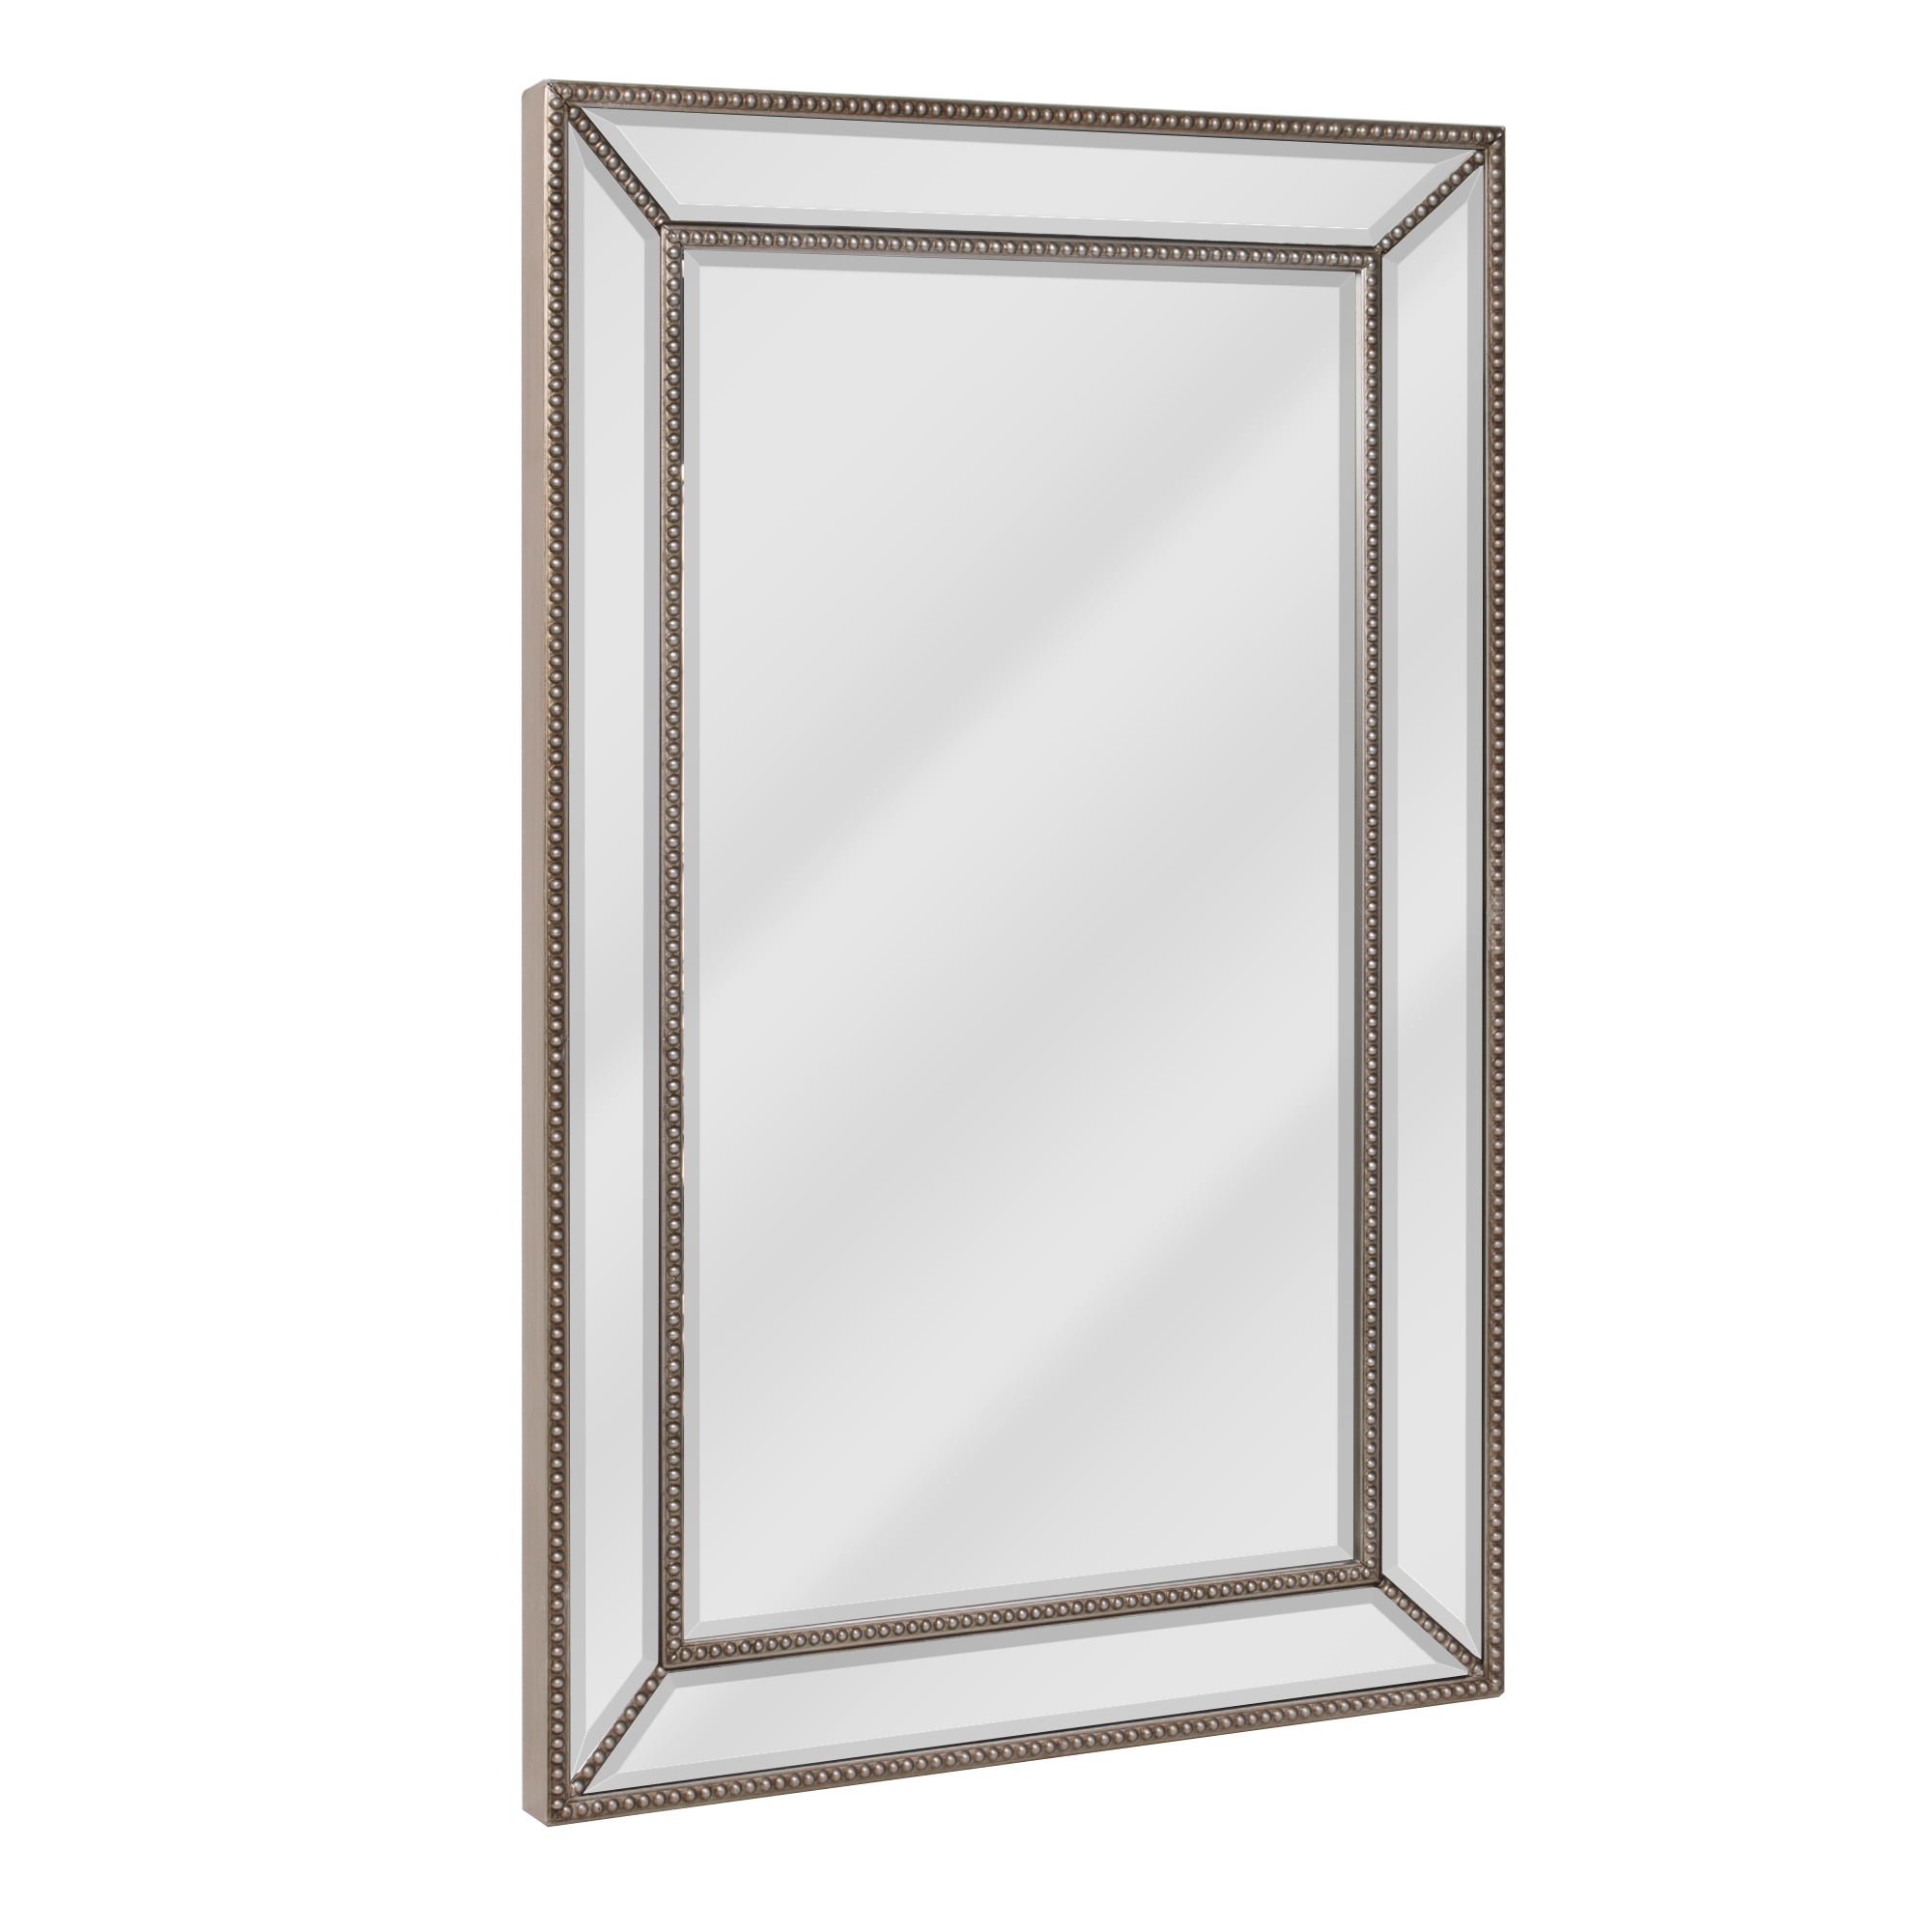 Plymor Long Octagon 5mm Beveled Glass Mirror 13 inch x 18 inch